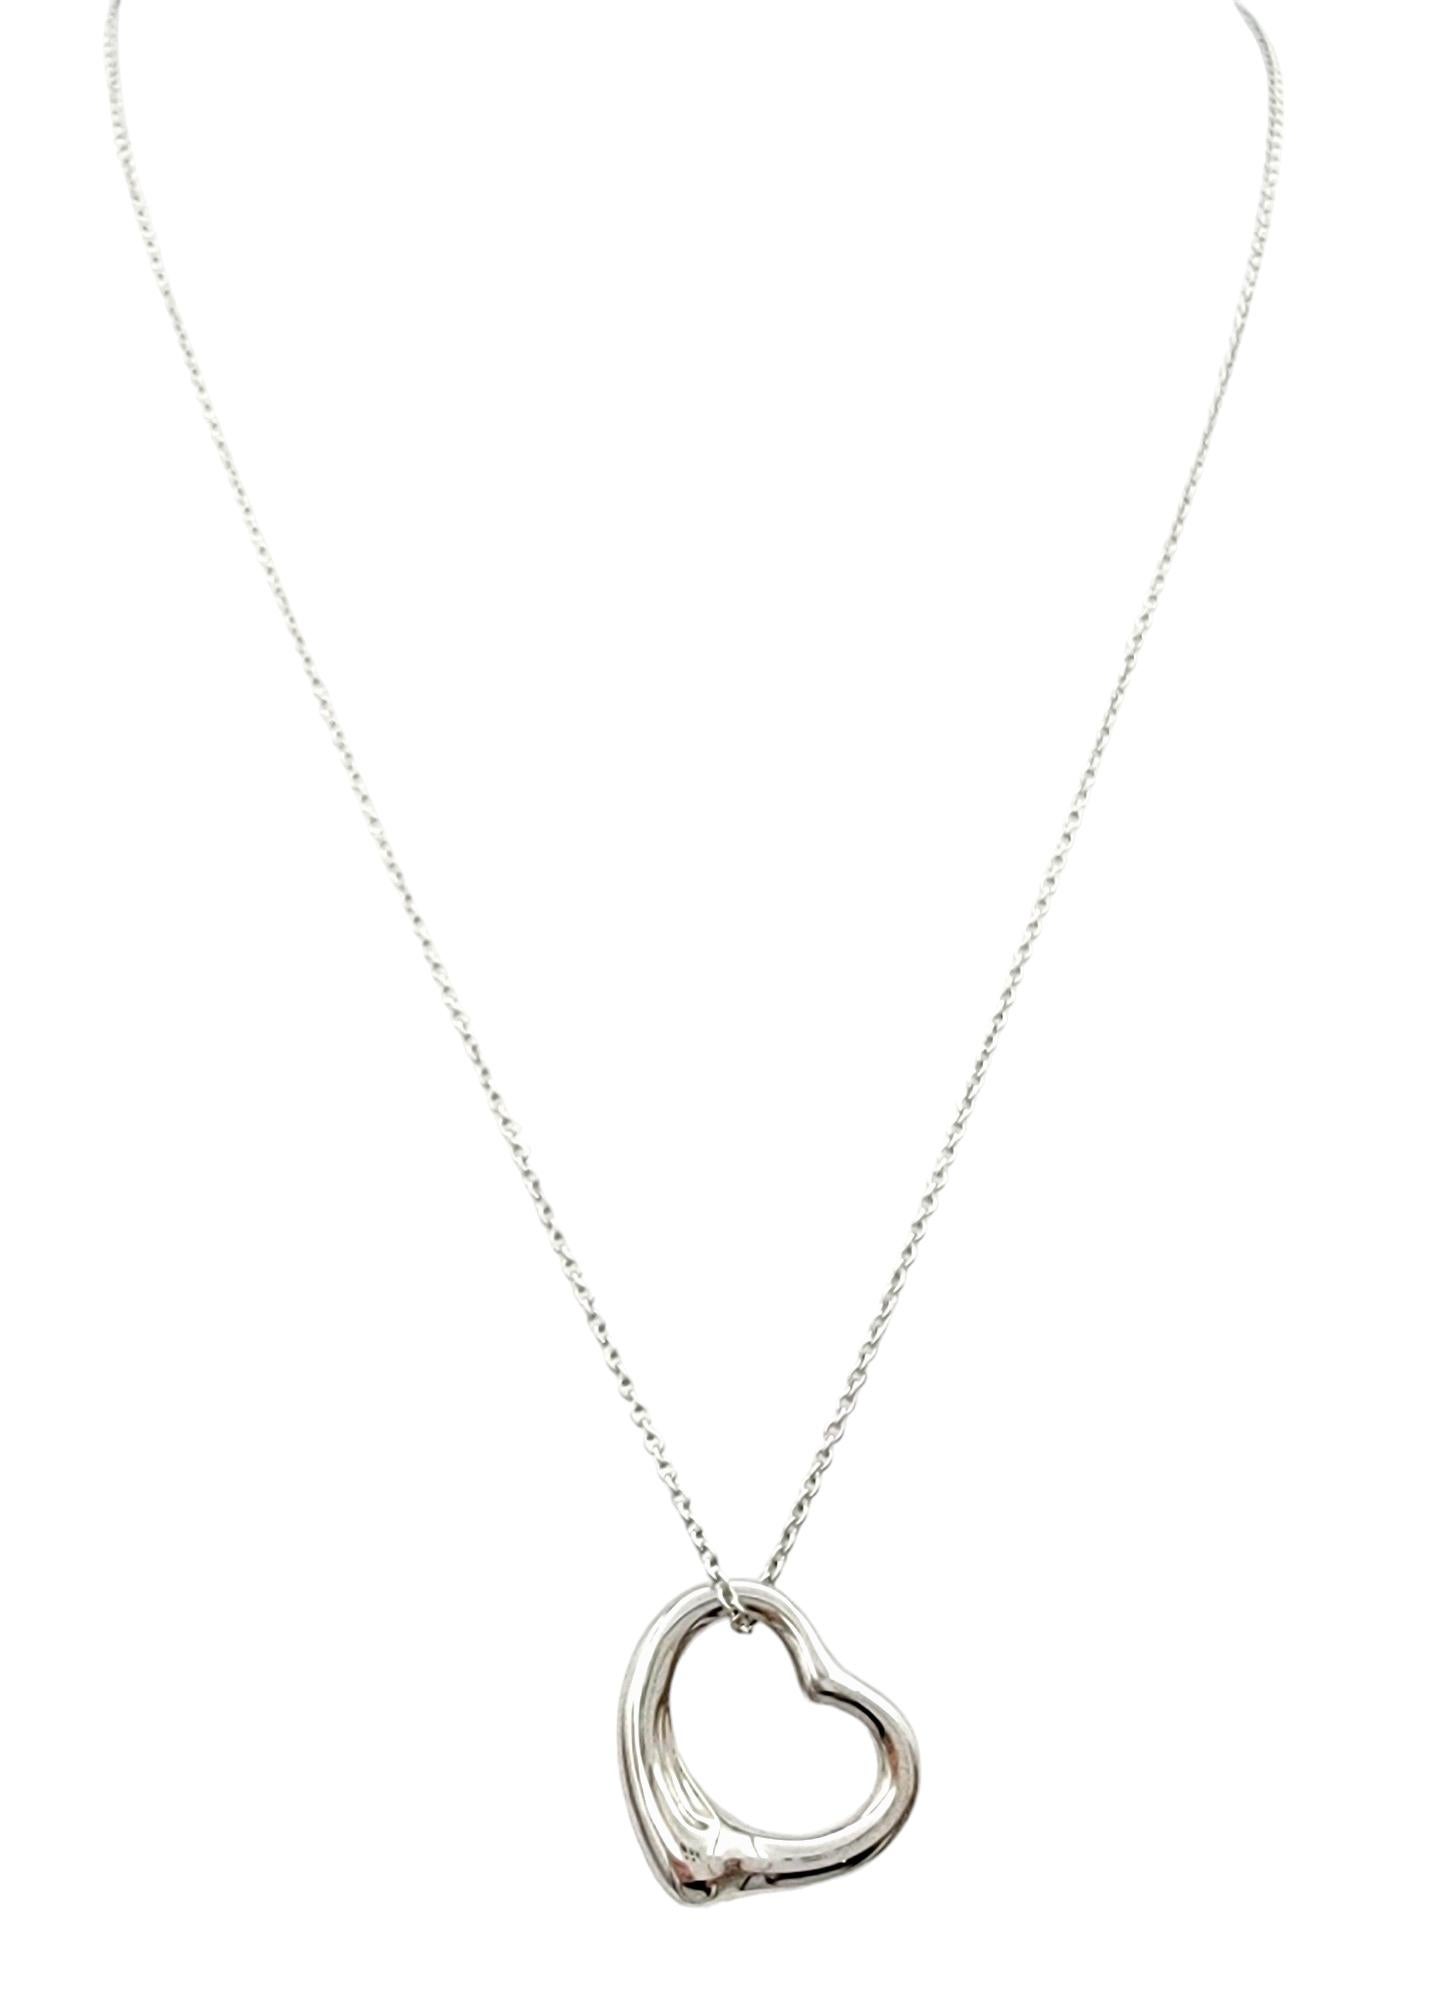 Tiffany & Co. Elsa Peretti Open Heart Pendant Chain Necklace Set in Platinum In Good Condition For Sale In Scottsdale, AZ